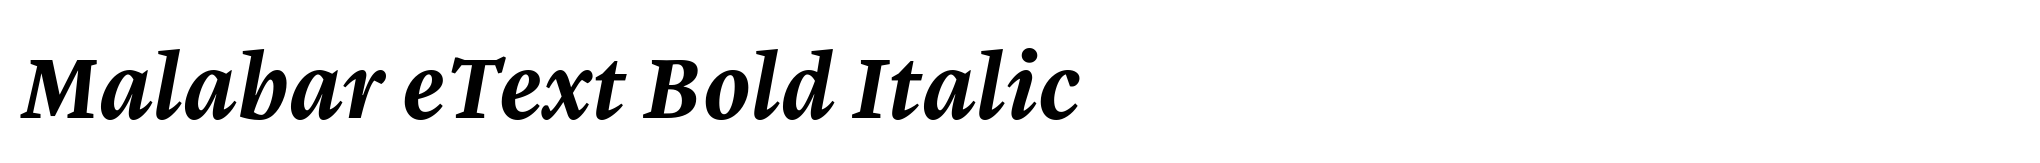 Malabar eText Bold Italic image